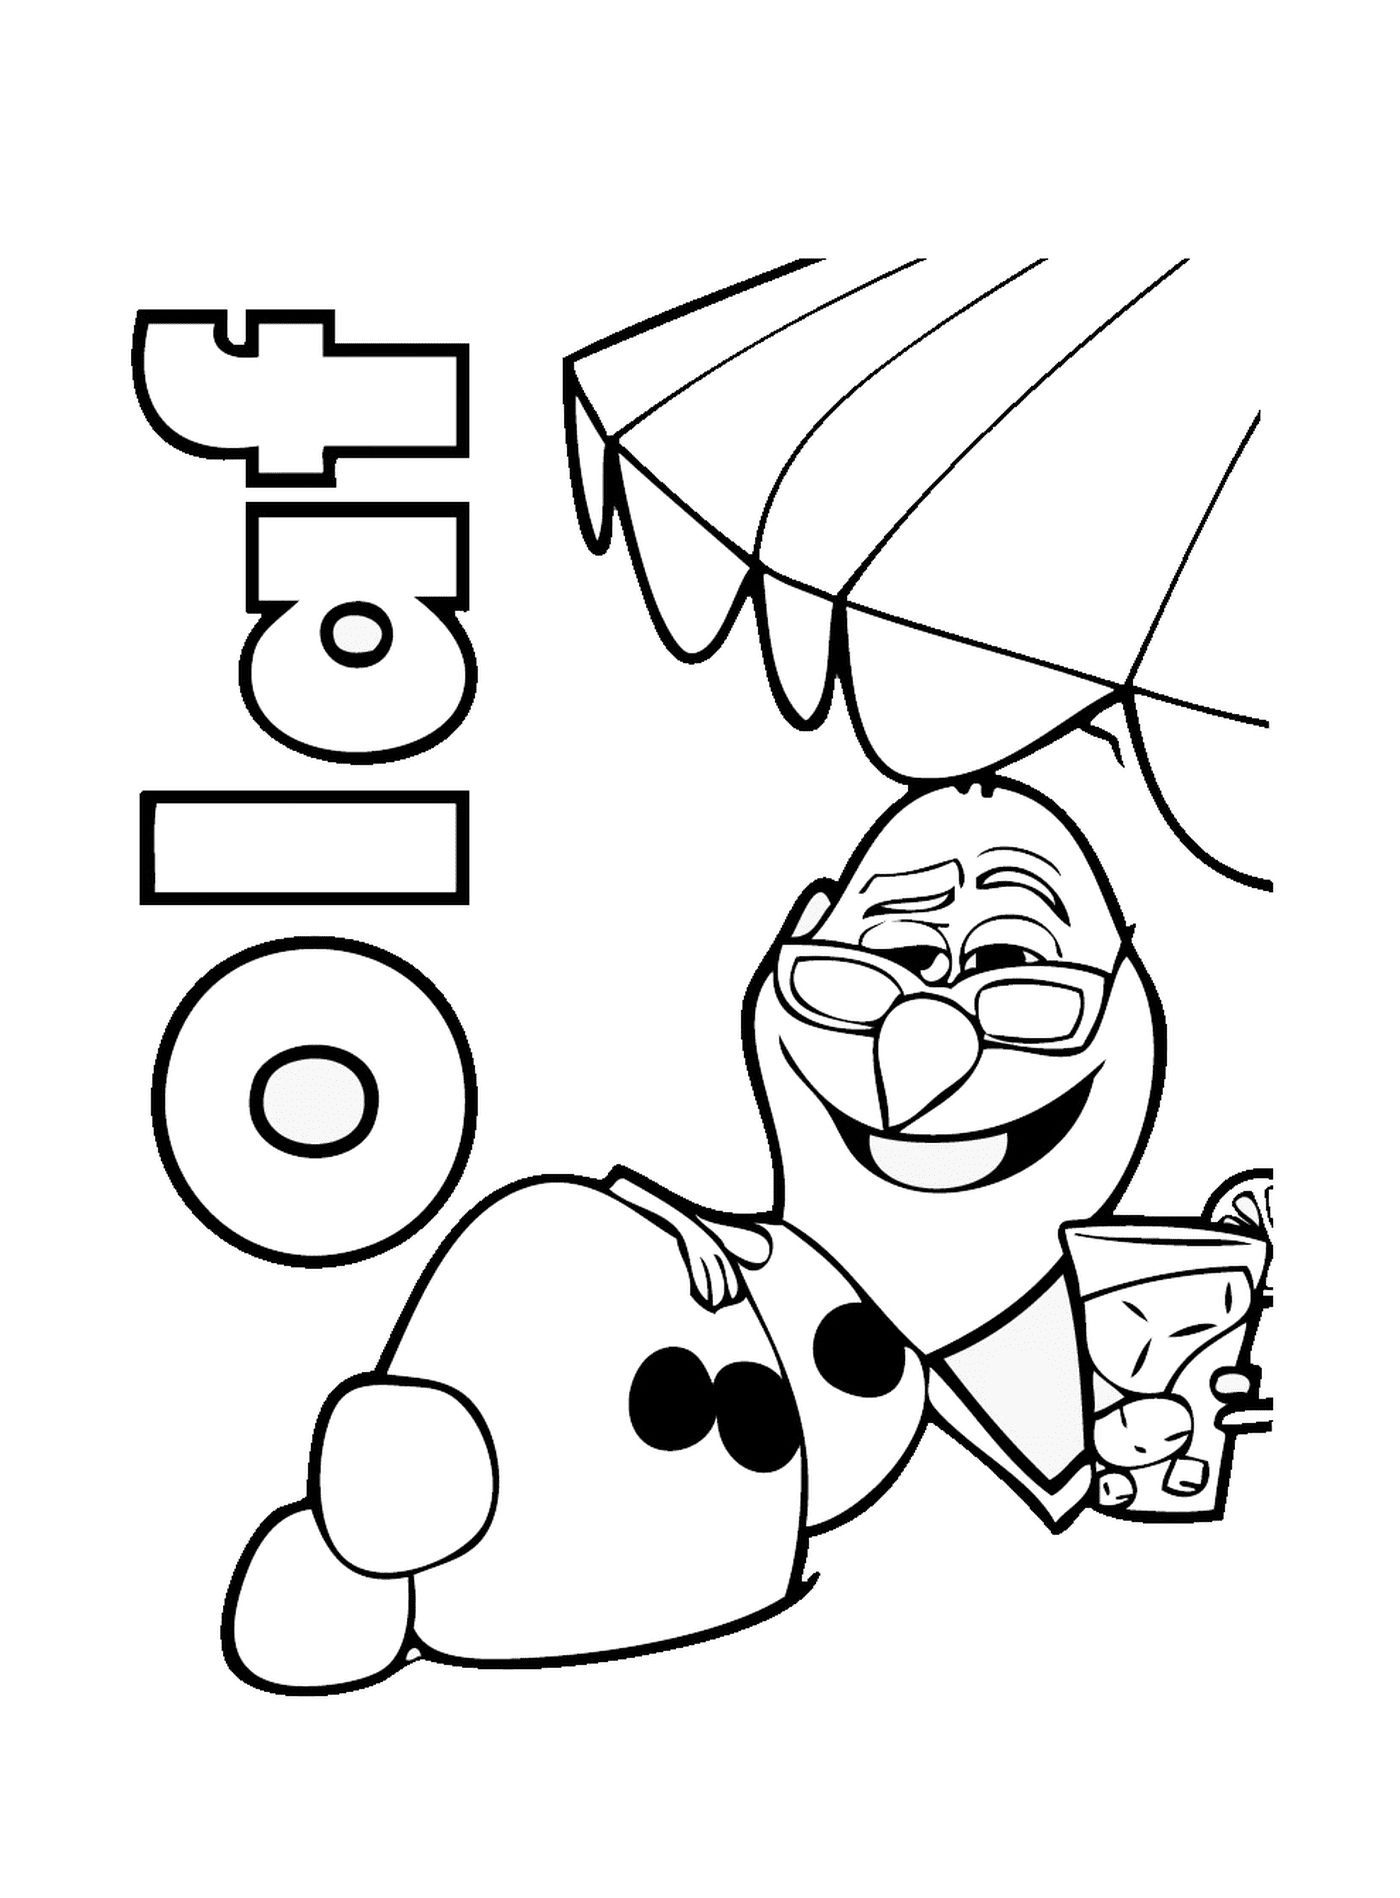  Olaf beve tè freddo in spiaggia 